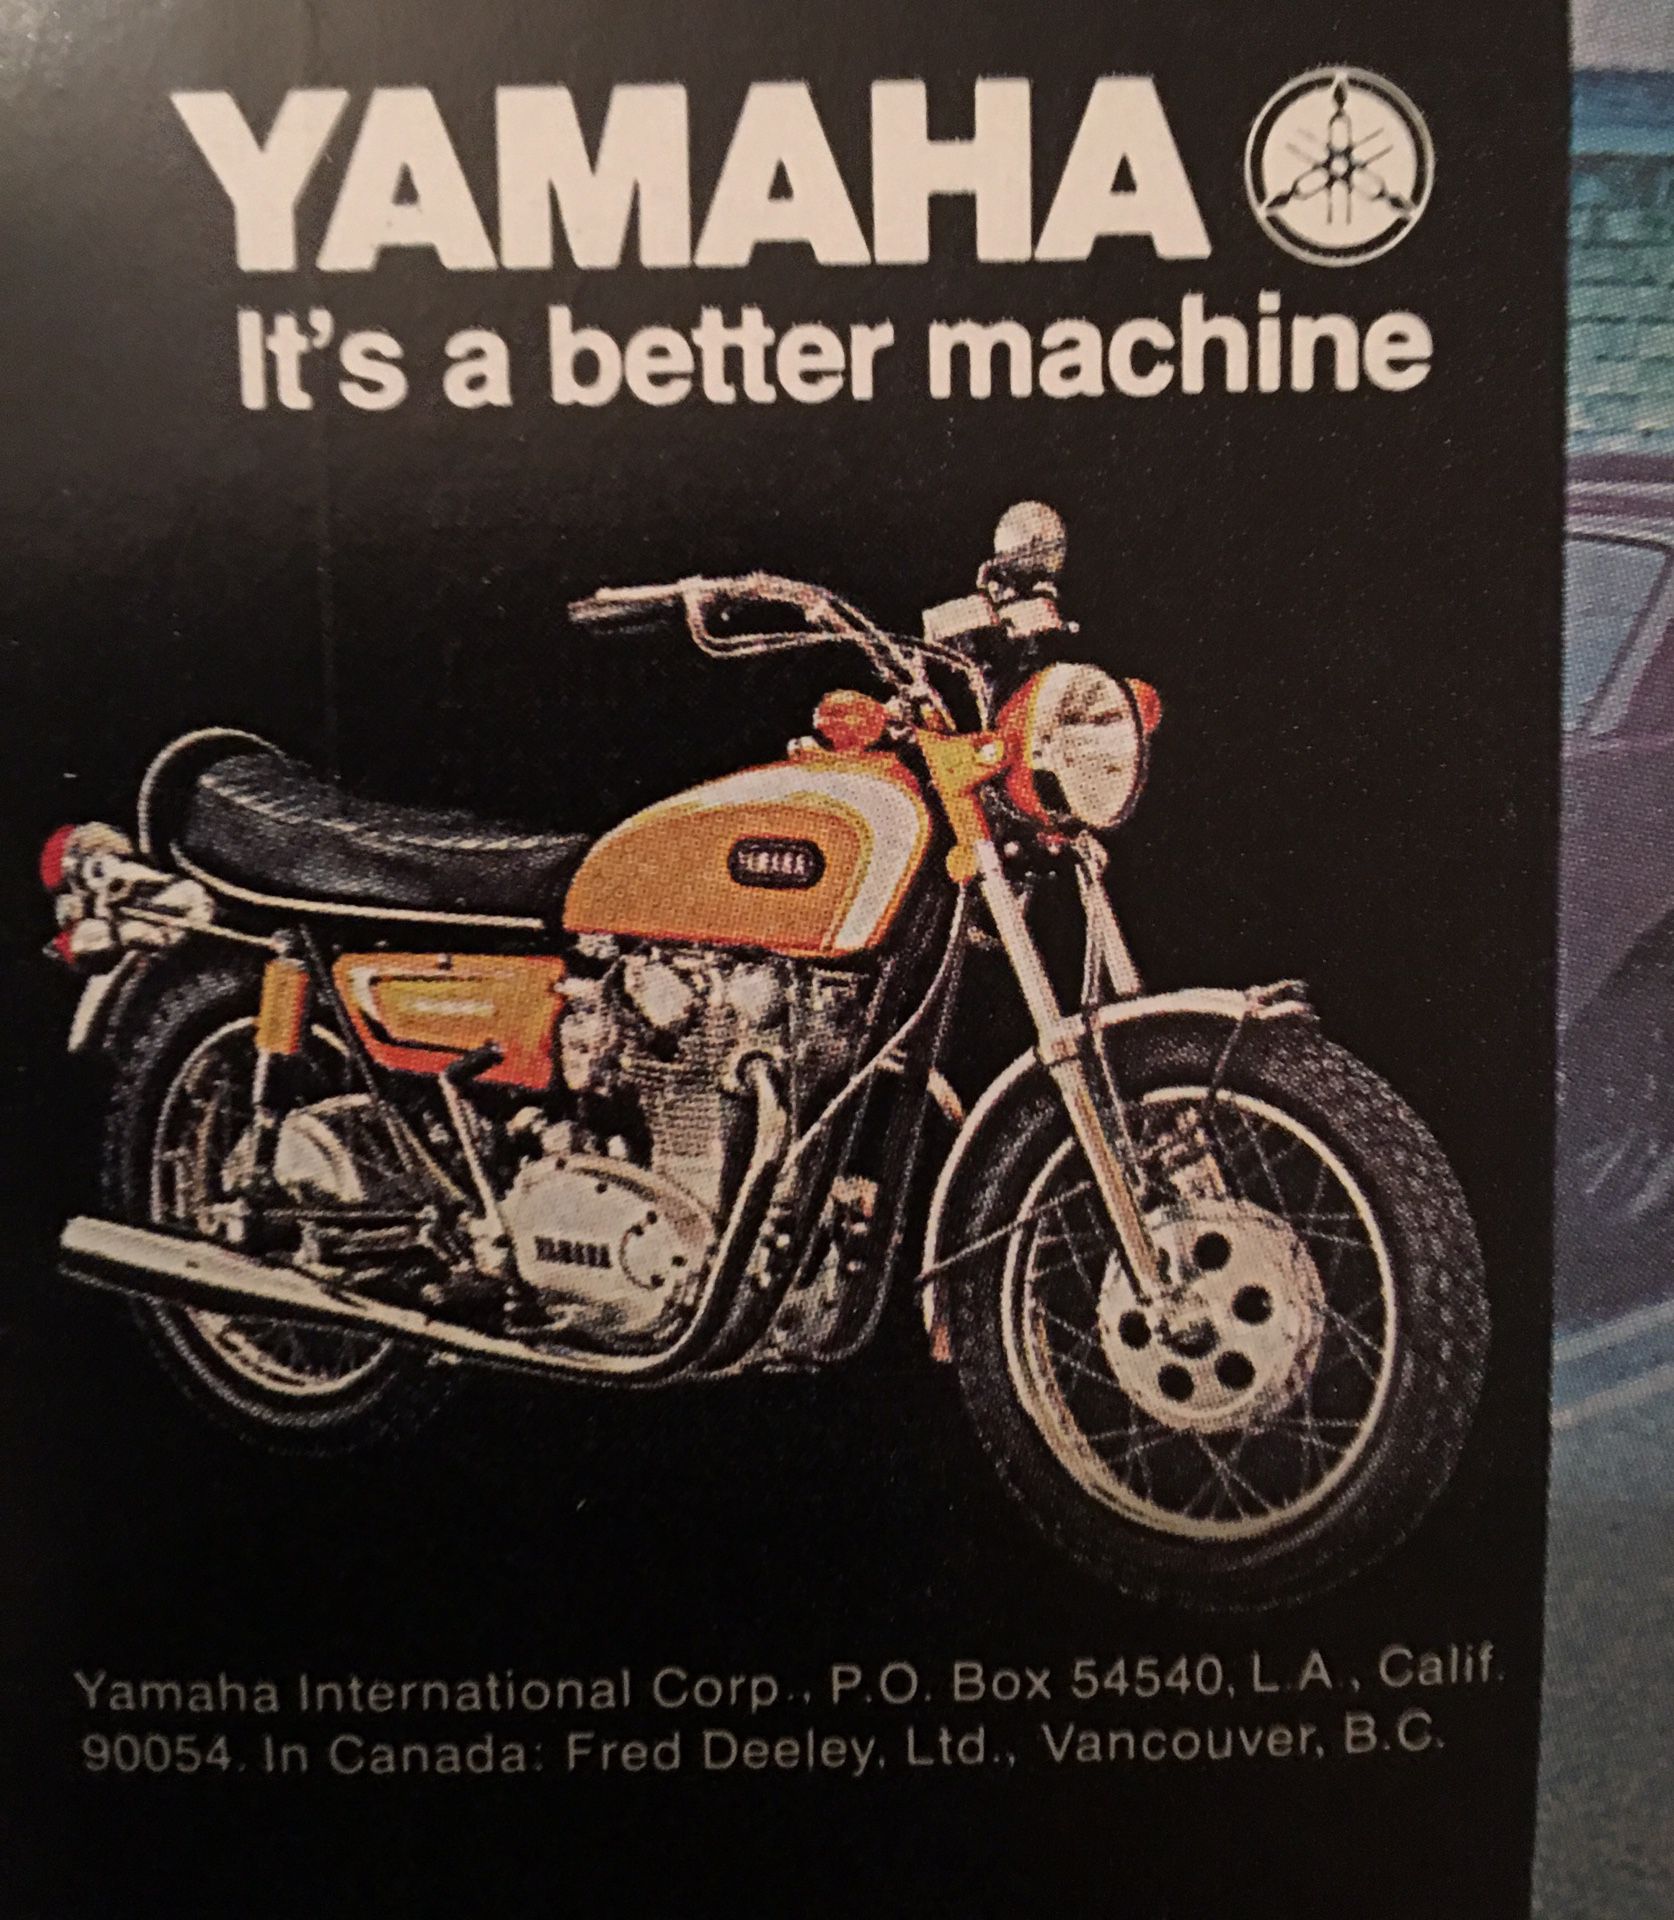 Original Yamaha motorcycle advertisement